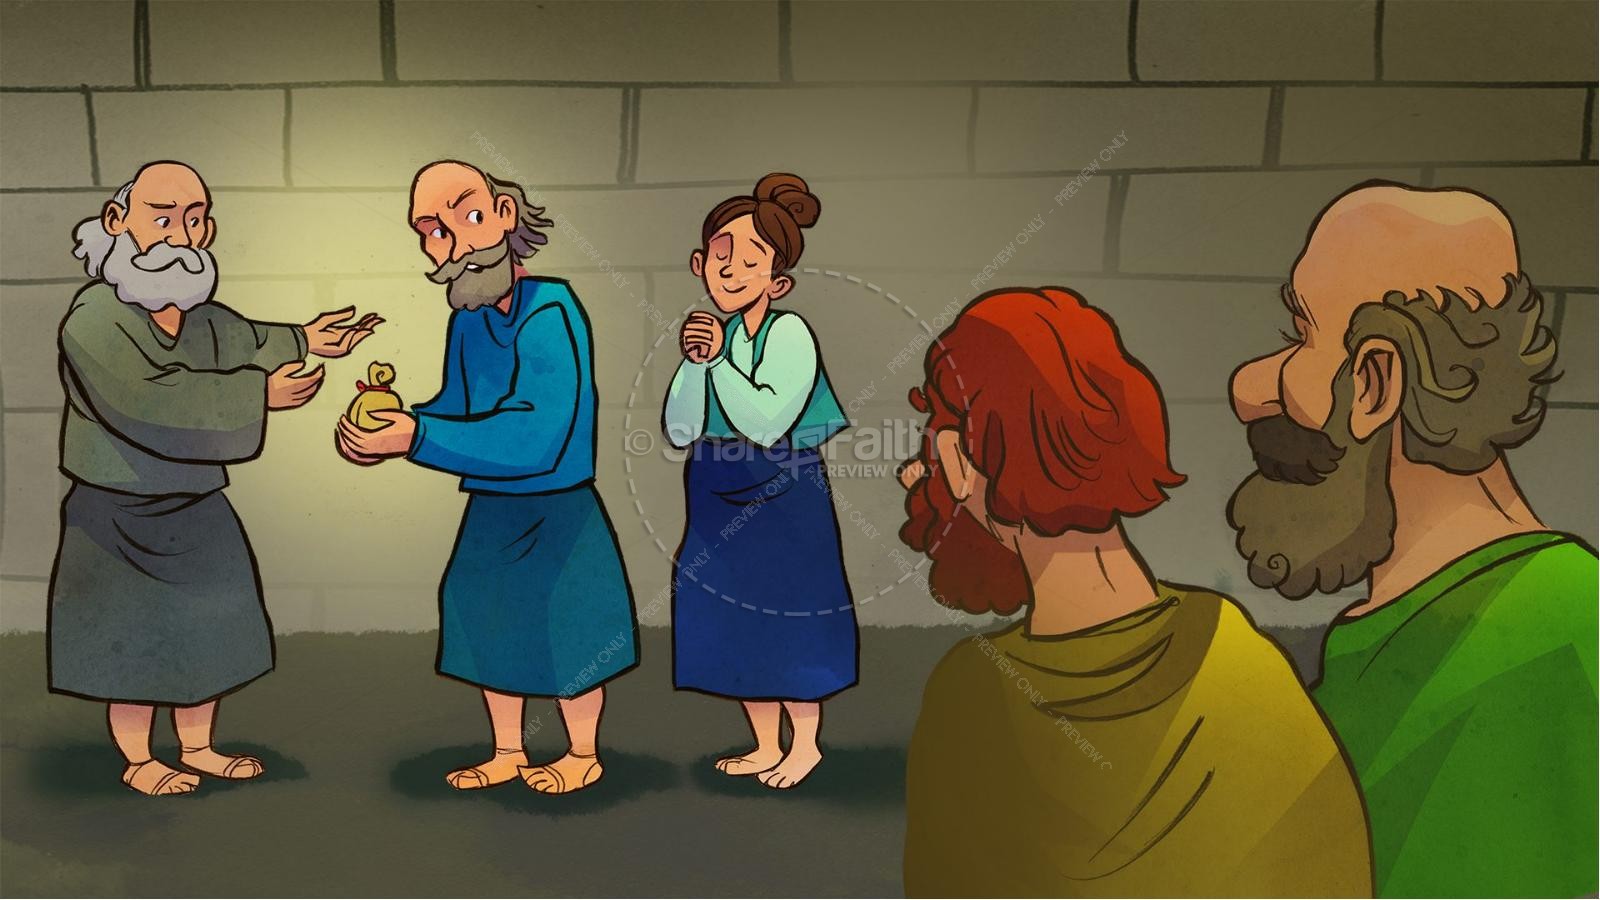 Acts 5 Ananias and Sapphira Kids Bible Stories Thumbnail 3